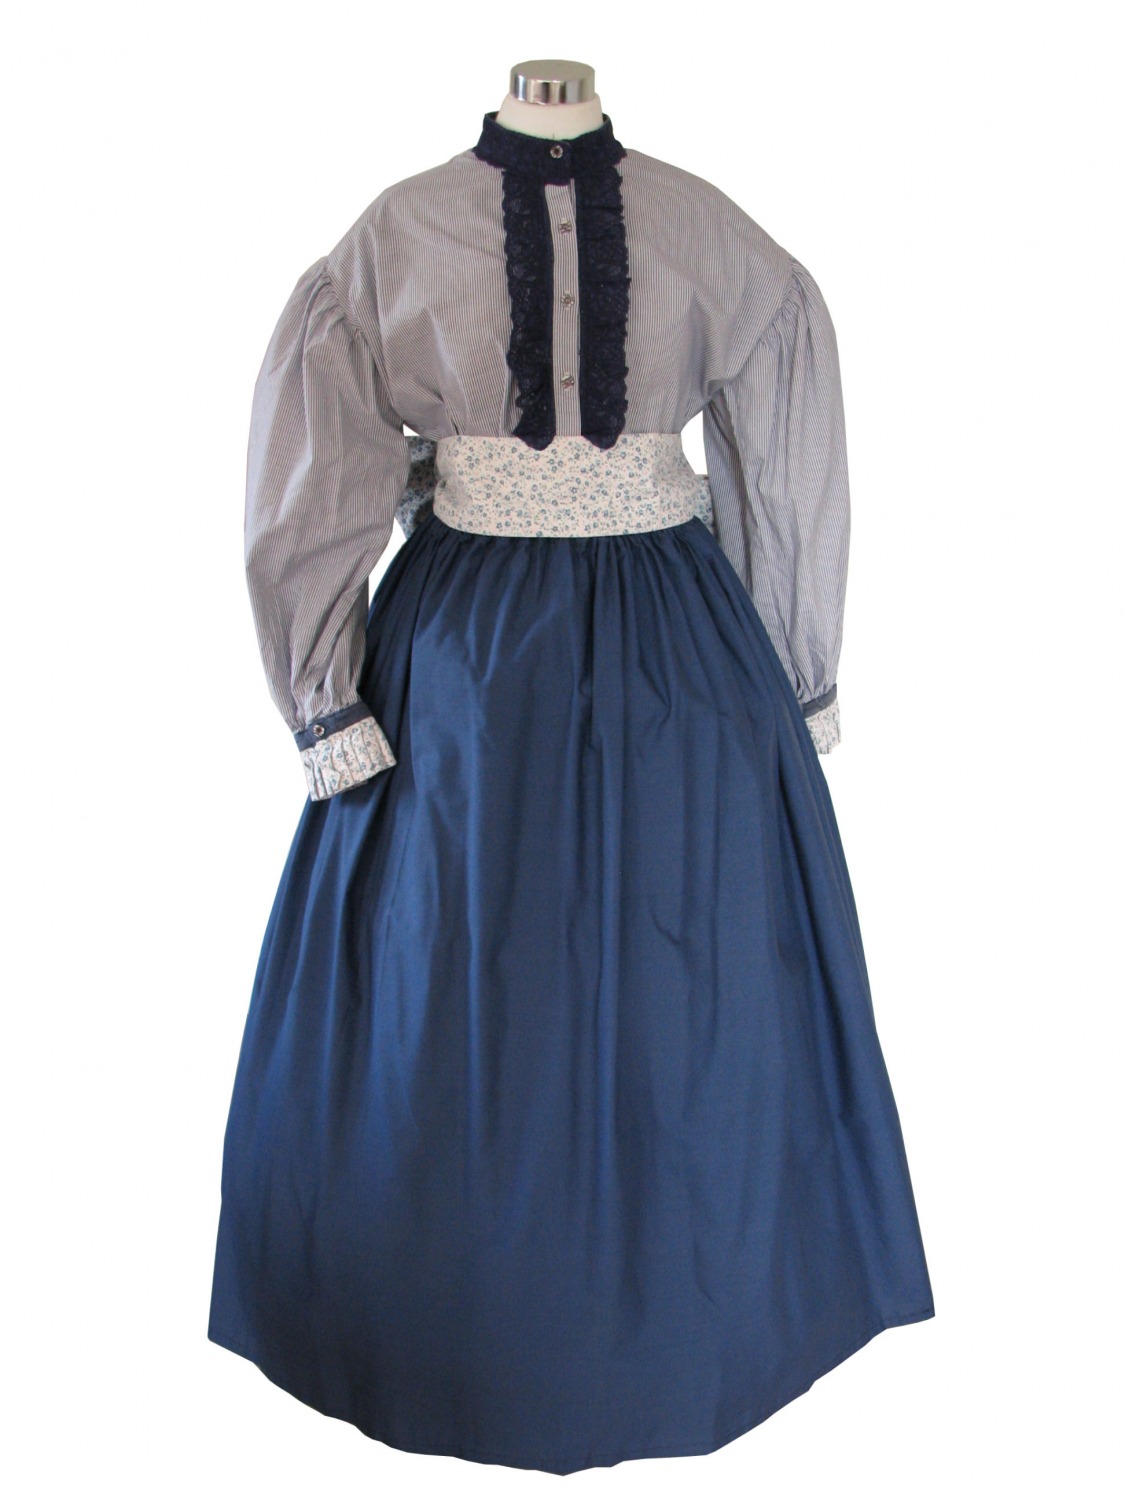 Ladies Carol Singer Victorian Day Costume Size 16 - 18 Image